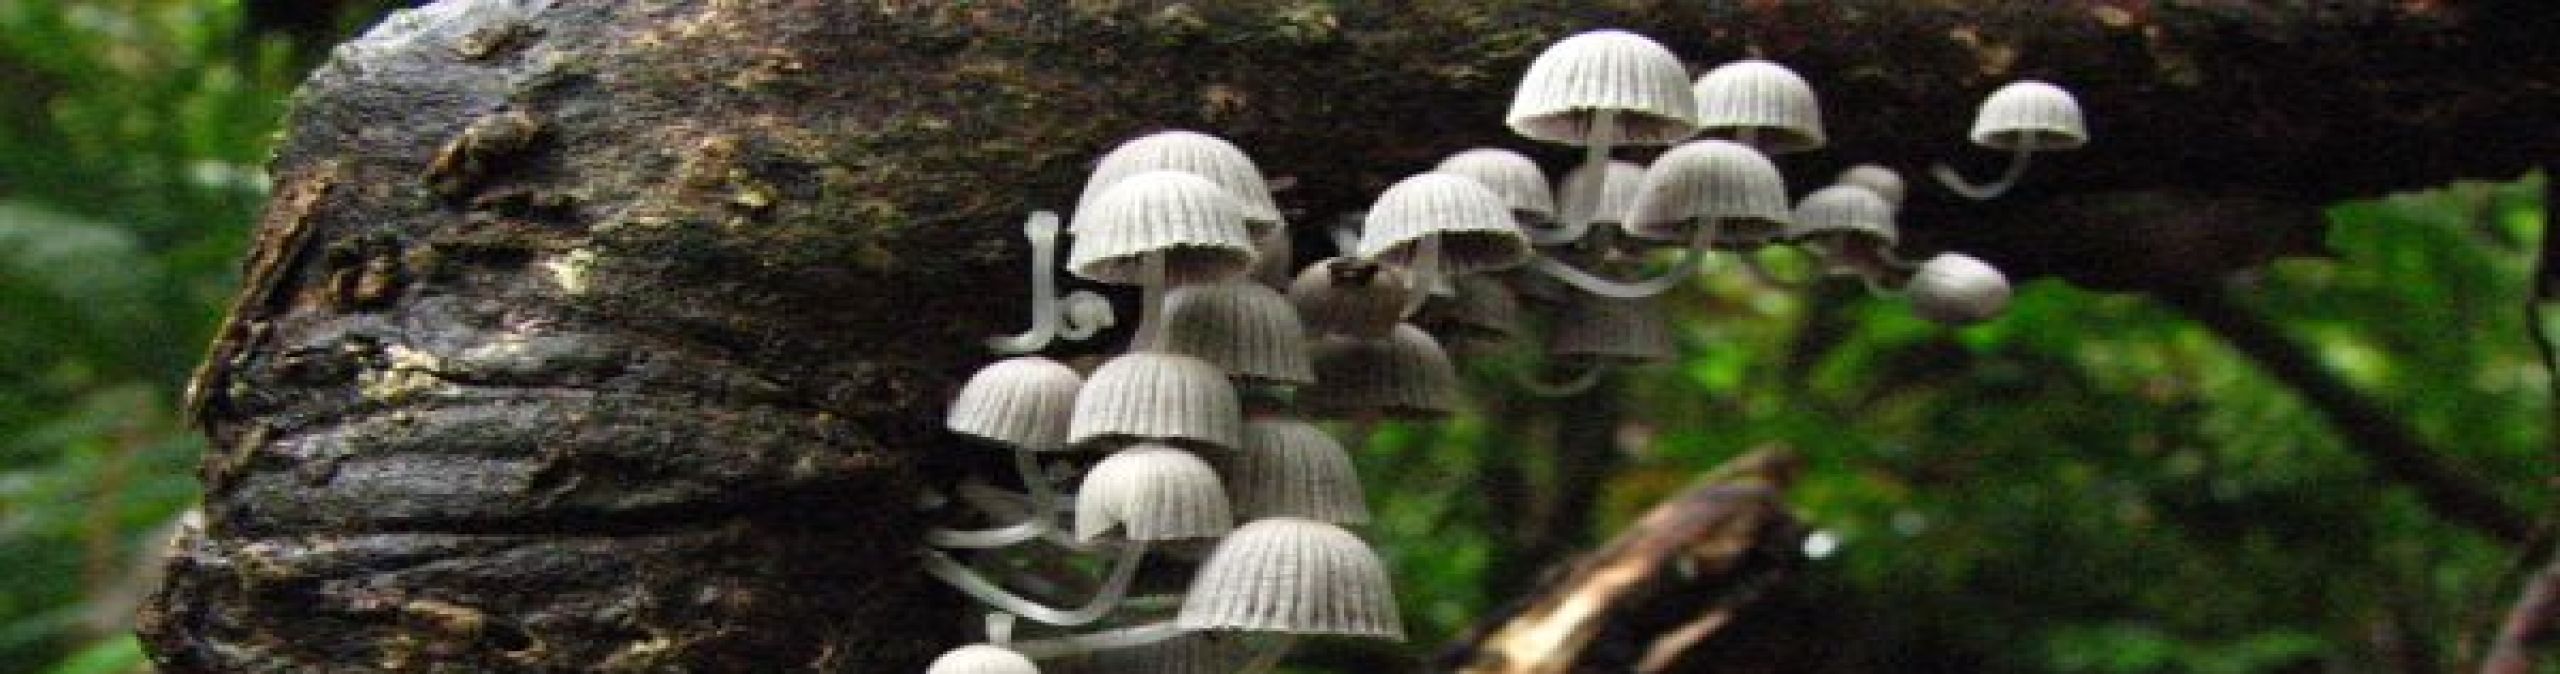 Fungi, Coprinus disseminatus
Photographer: Jason McCall